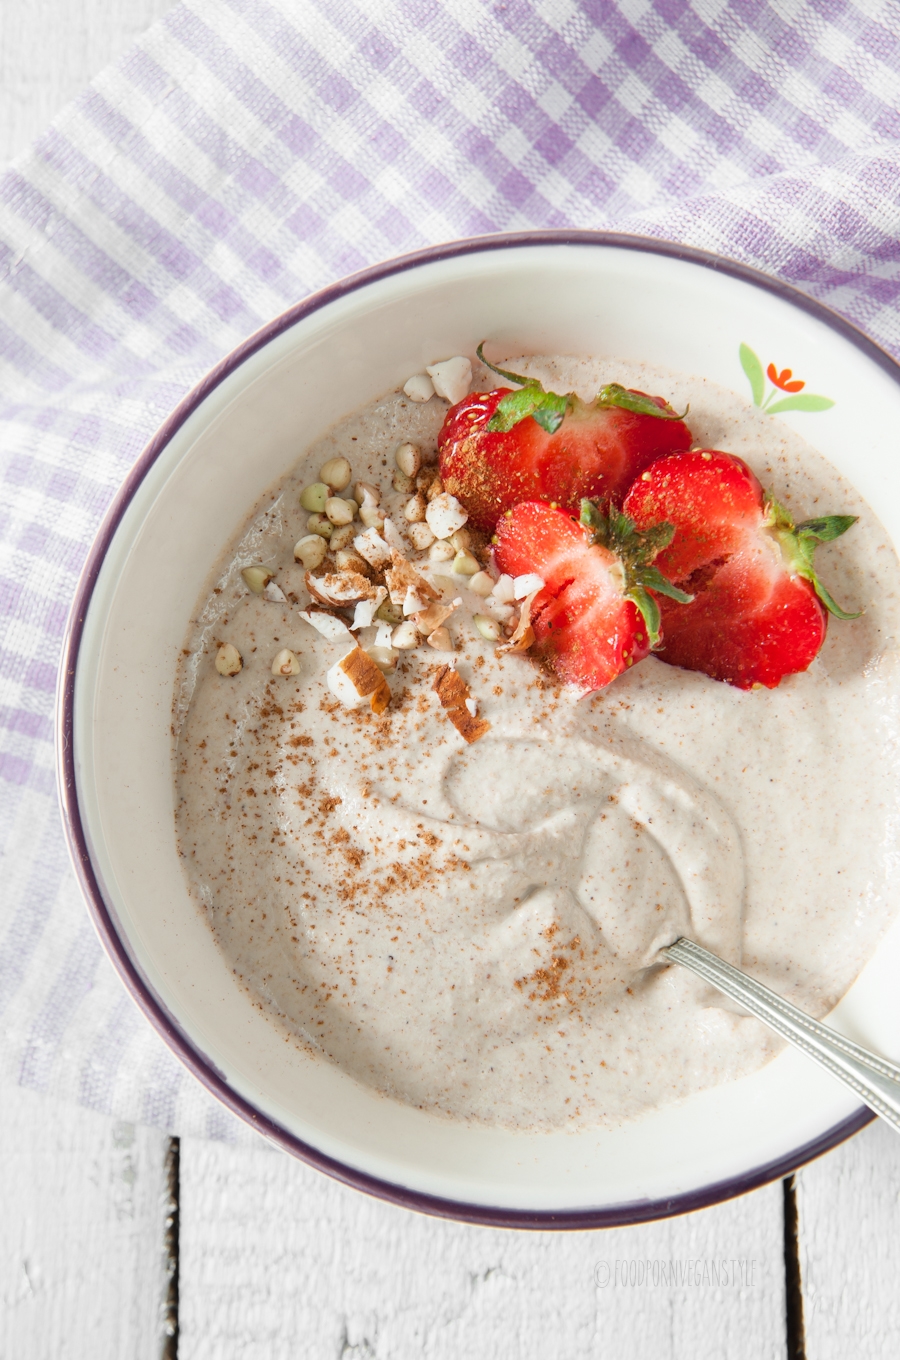 Raw buckwheat porridge with almonds and fruits